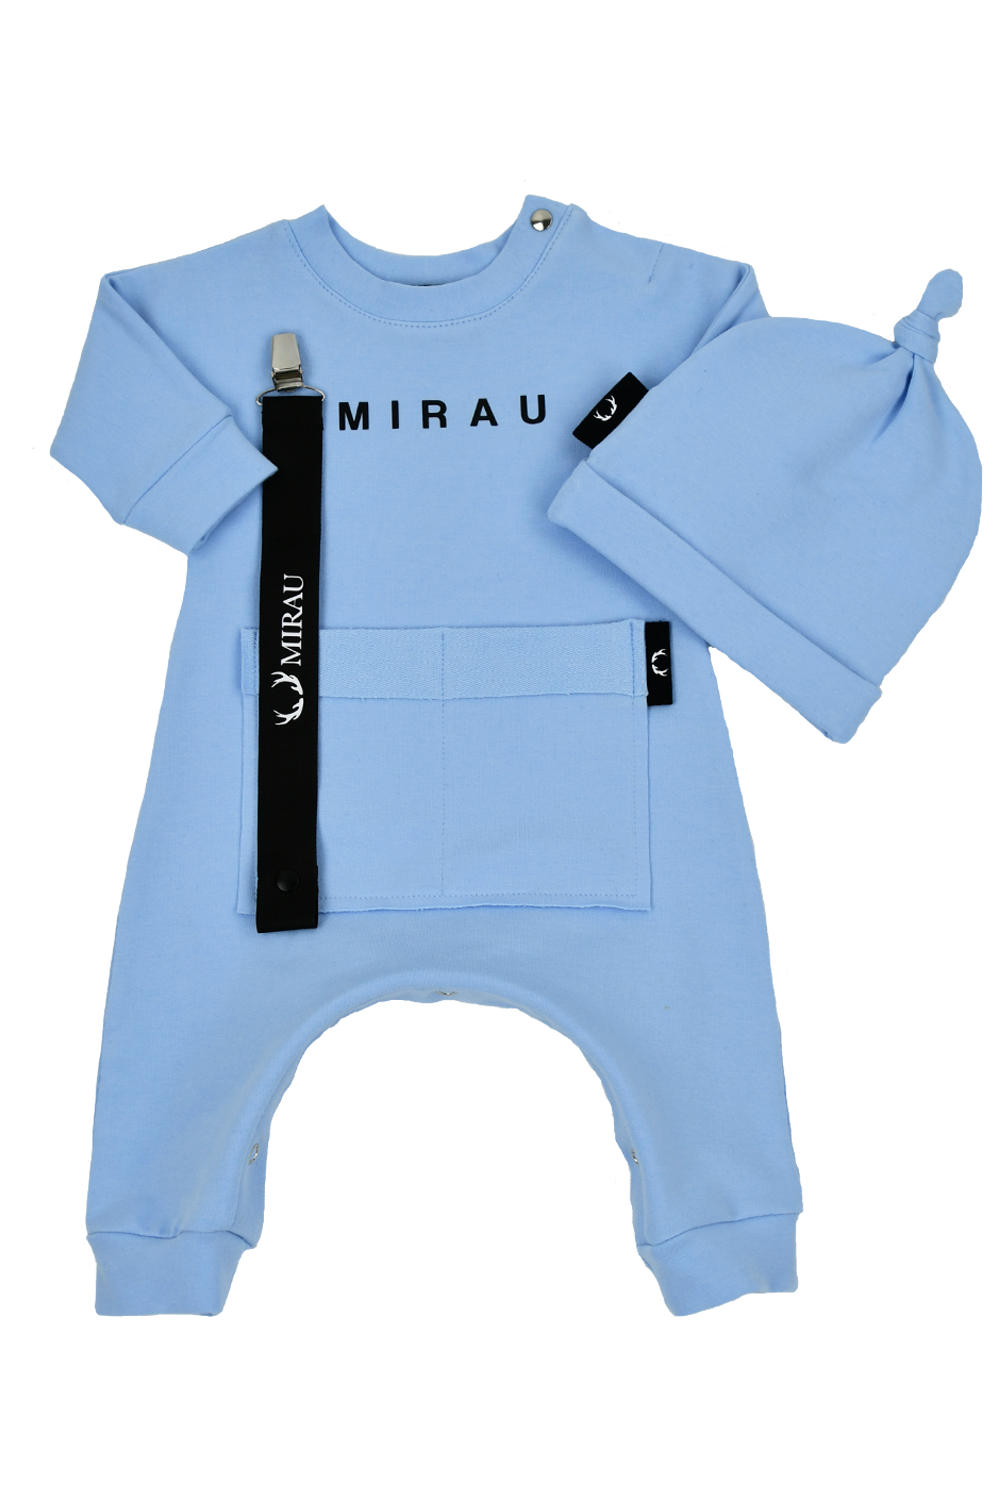 Baby chlapecký 3 - Komplet - Mirau